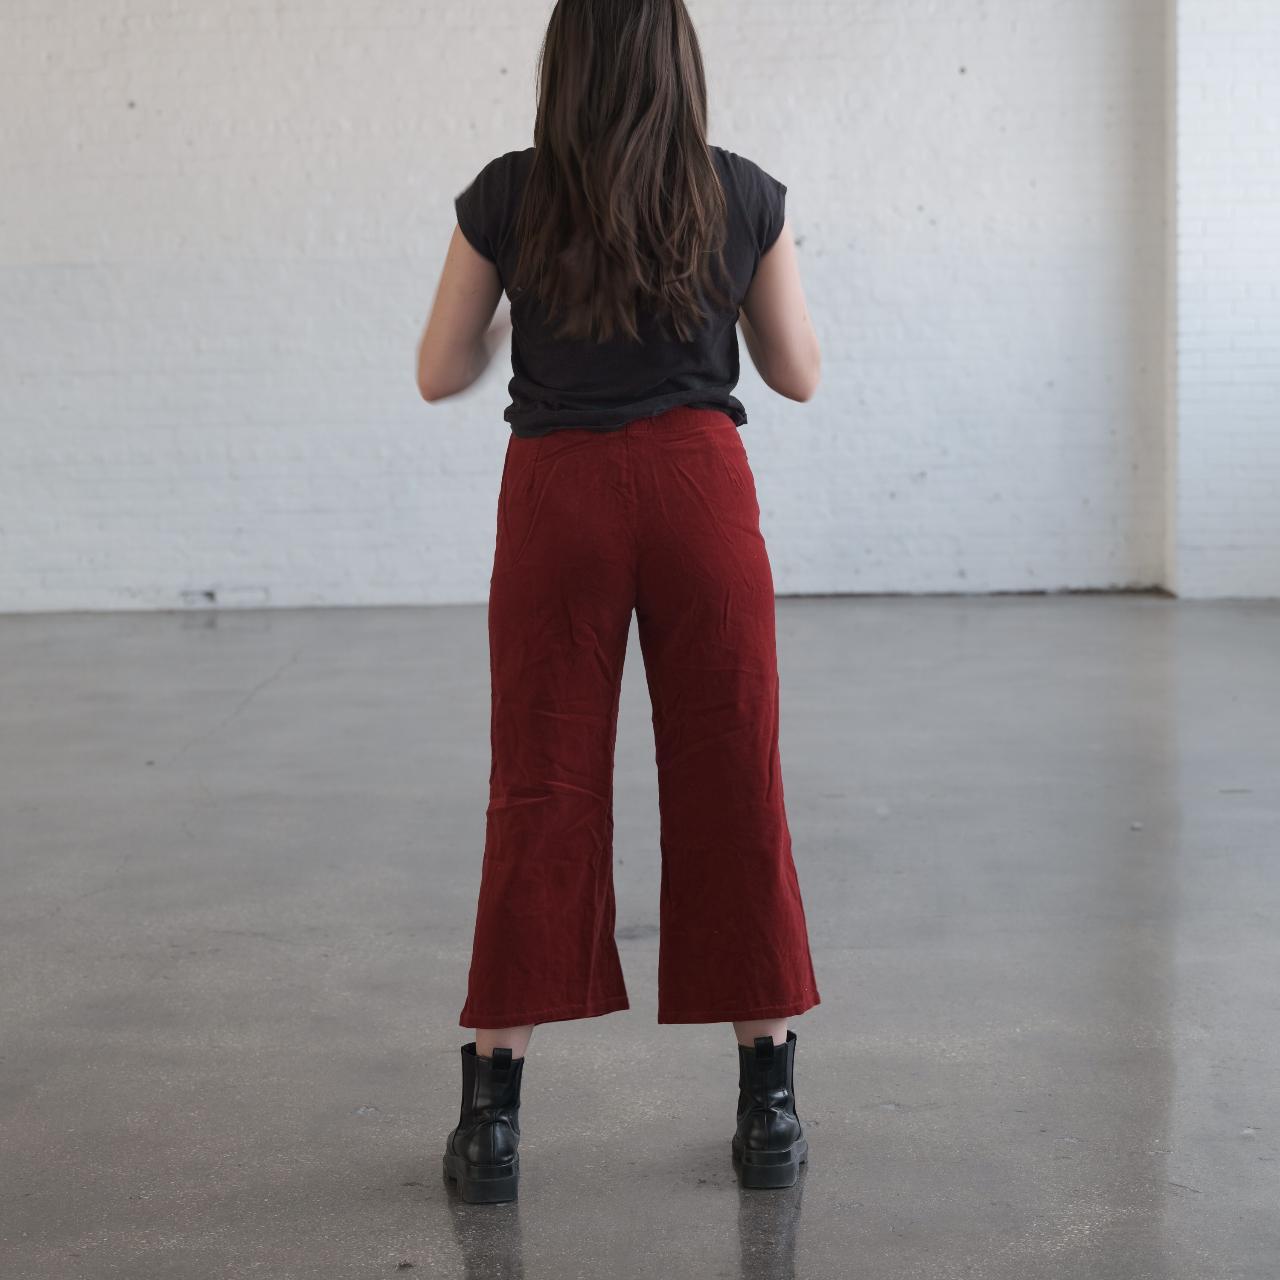 Product Image 1 - Retro red velvet pants crop

Size: